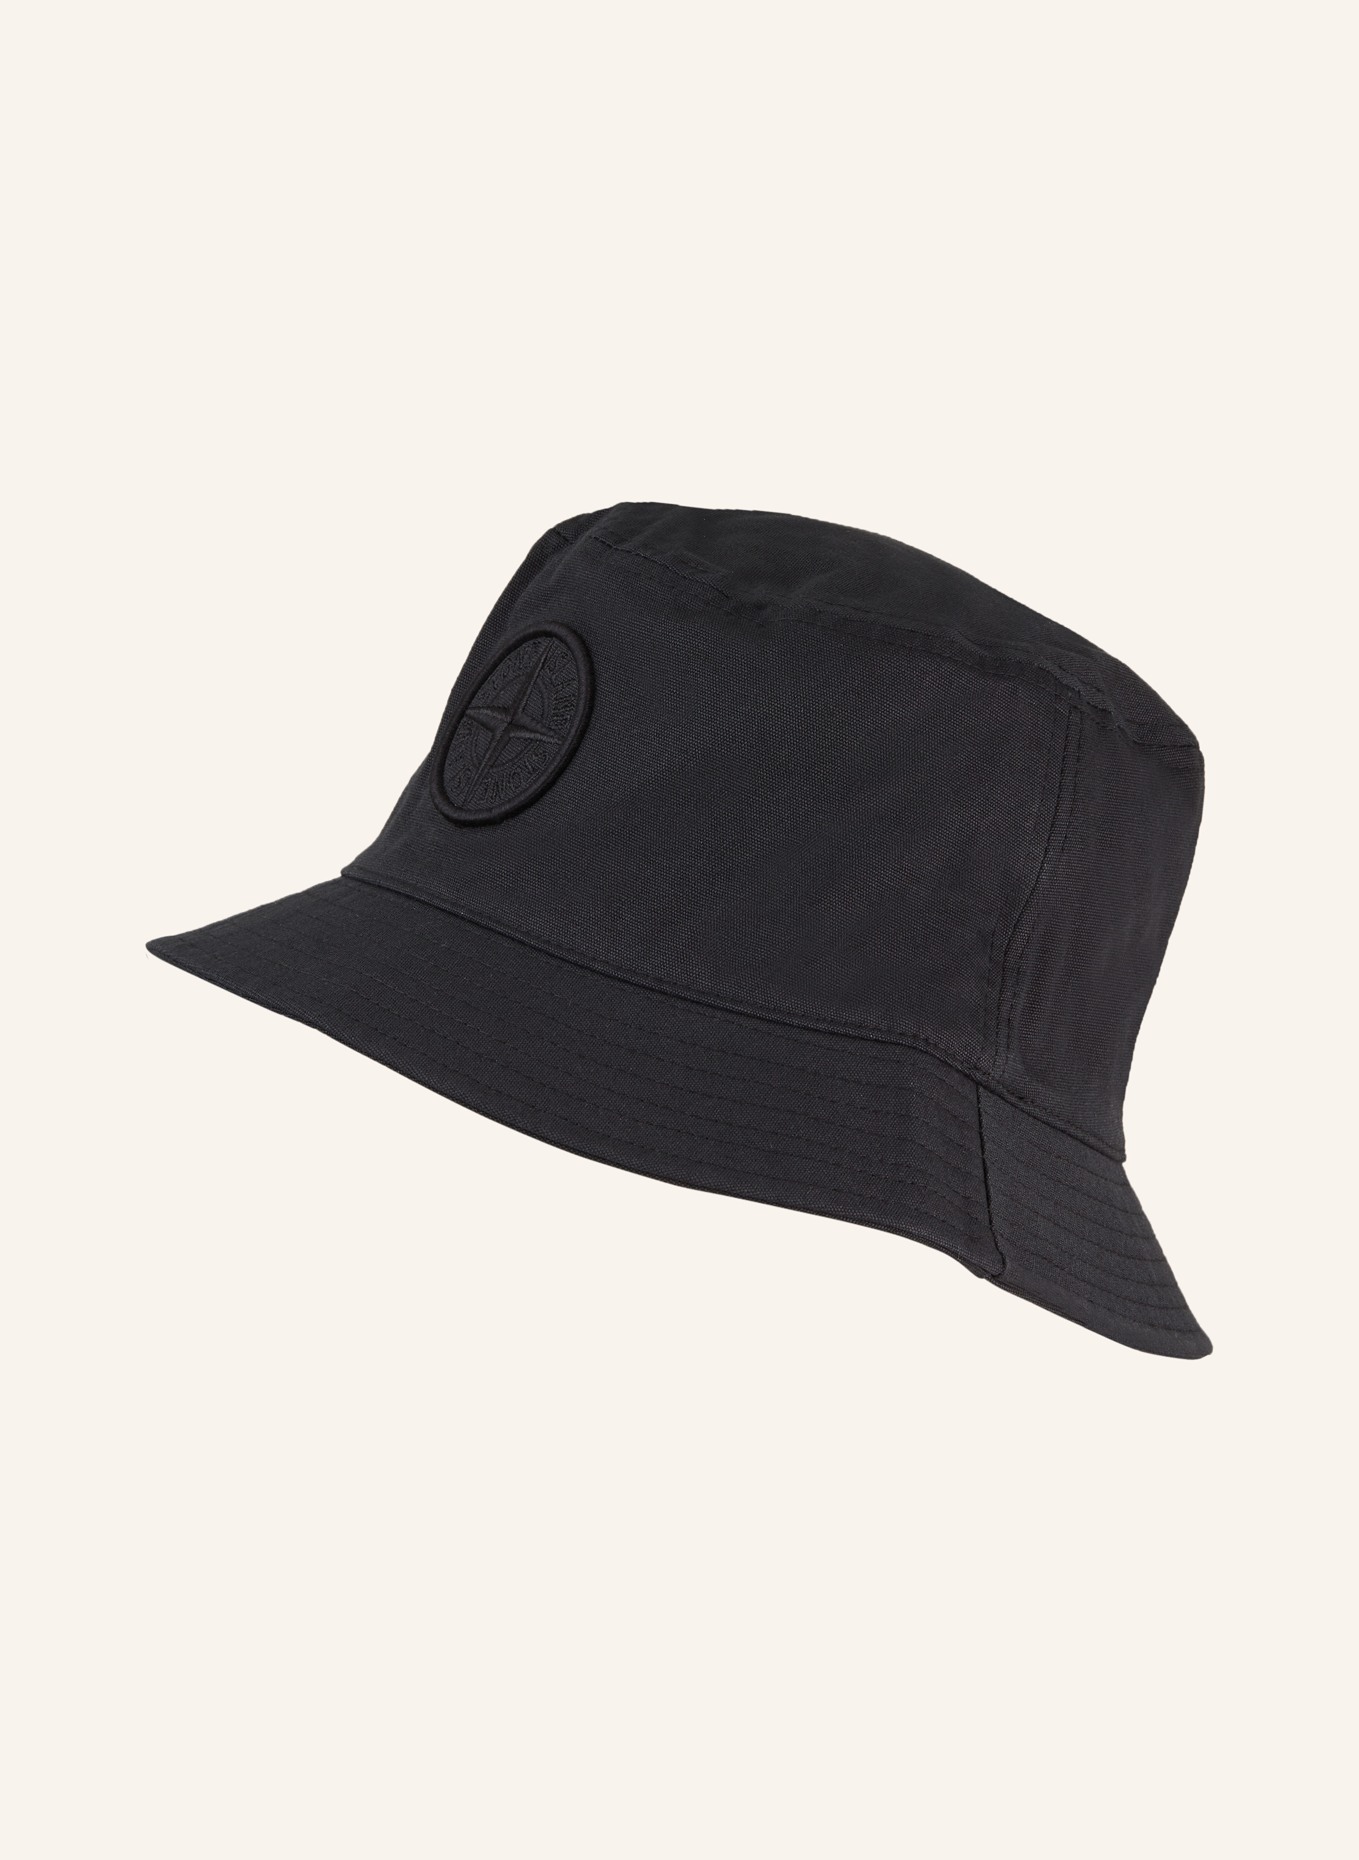 STONE ISLAND Bucket hat in black